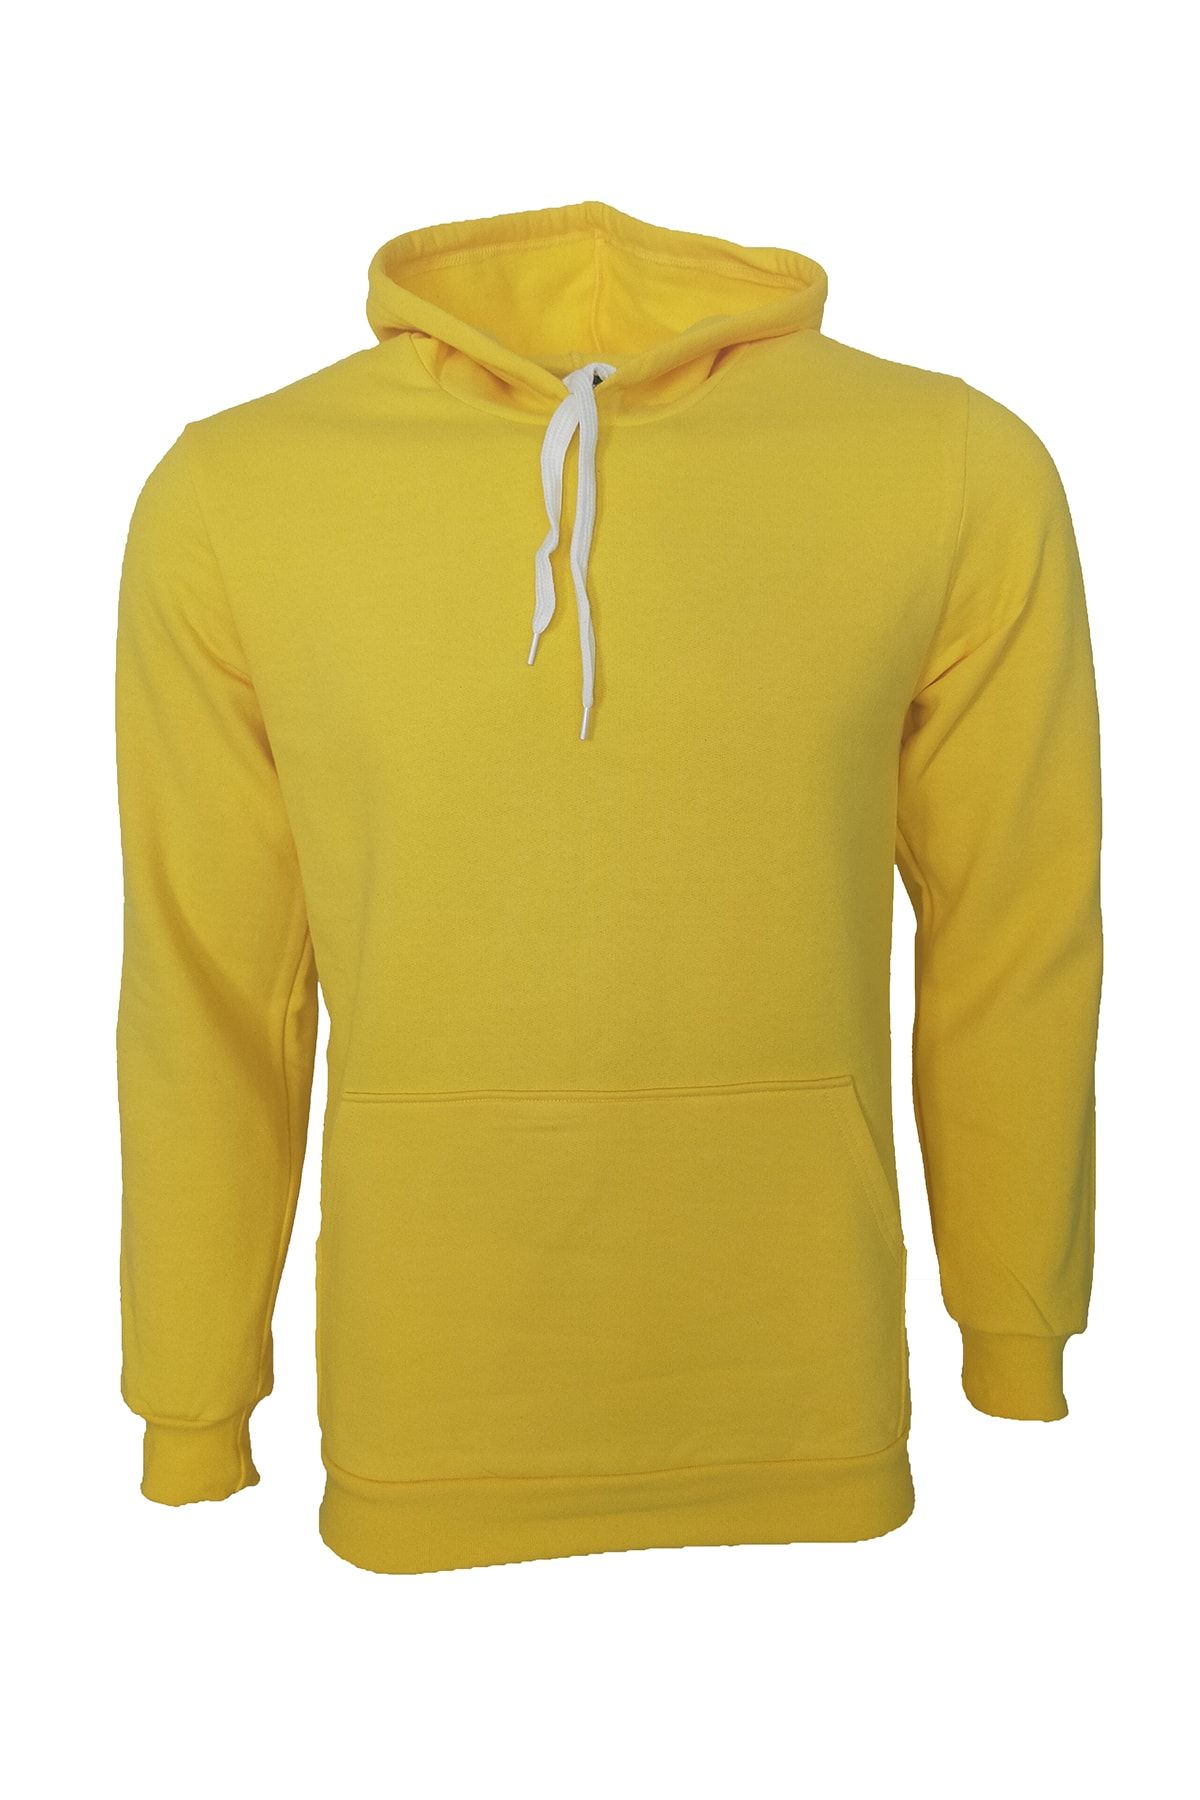 Raf Coll Unisex Basic Cepli Sarı Kapşonlu Sweatshirt